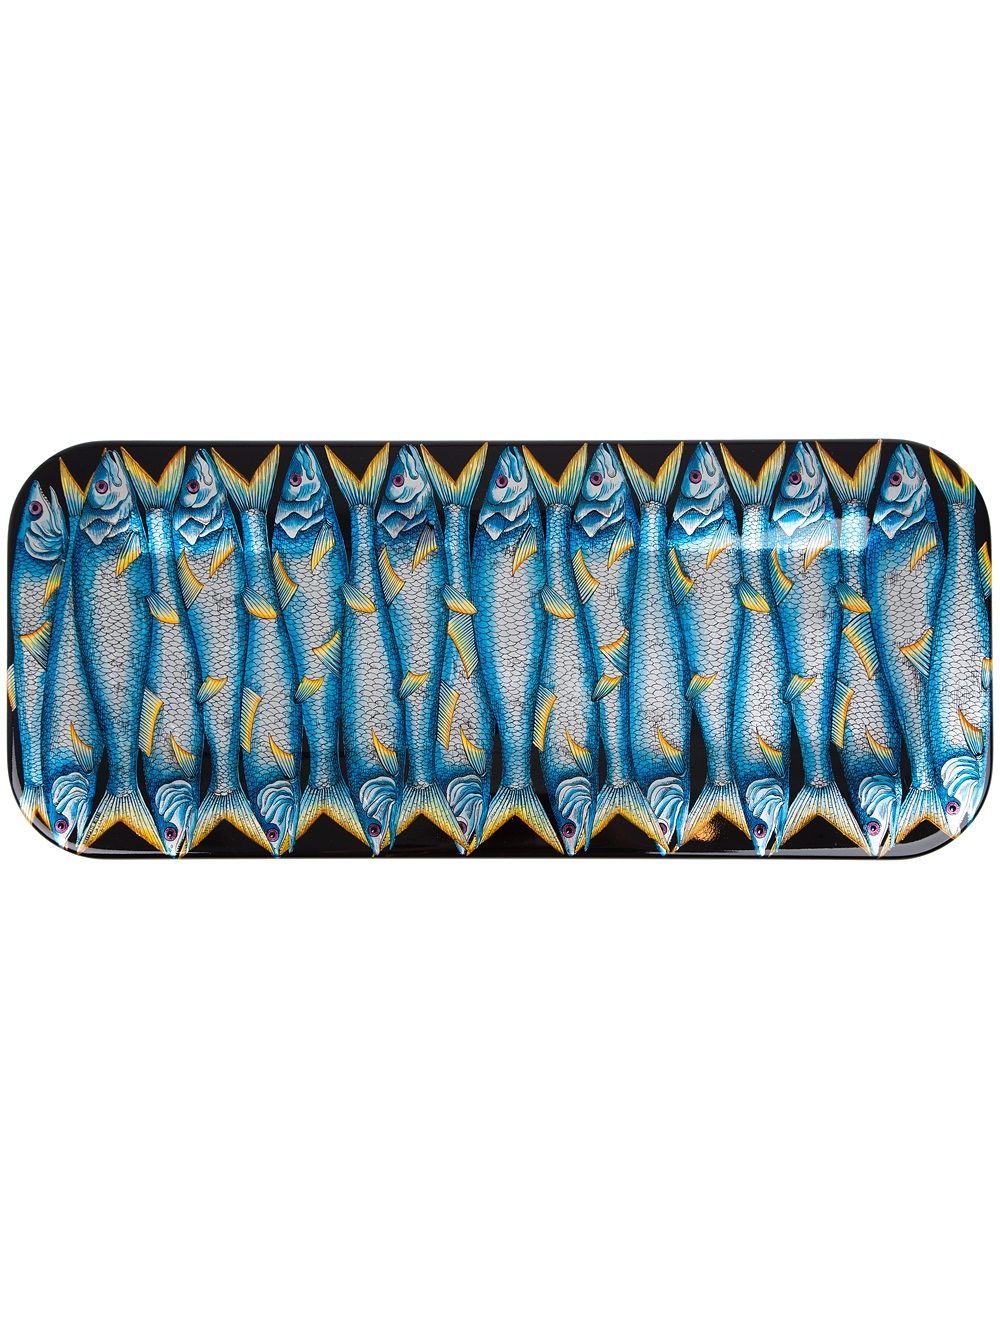 Fornasetti Sardine Tray In Blue